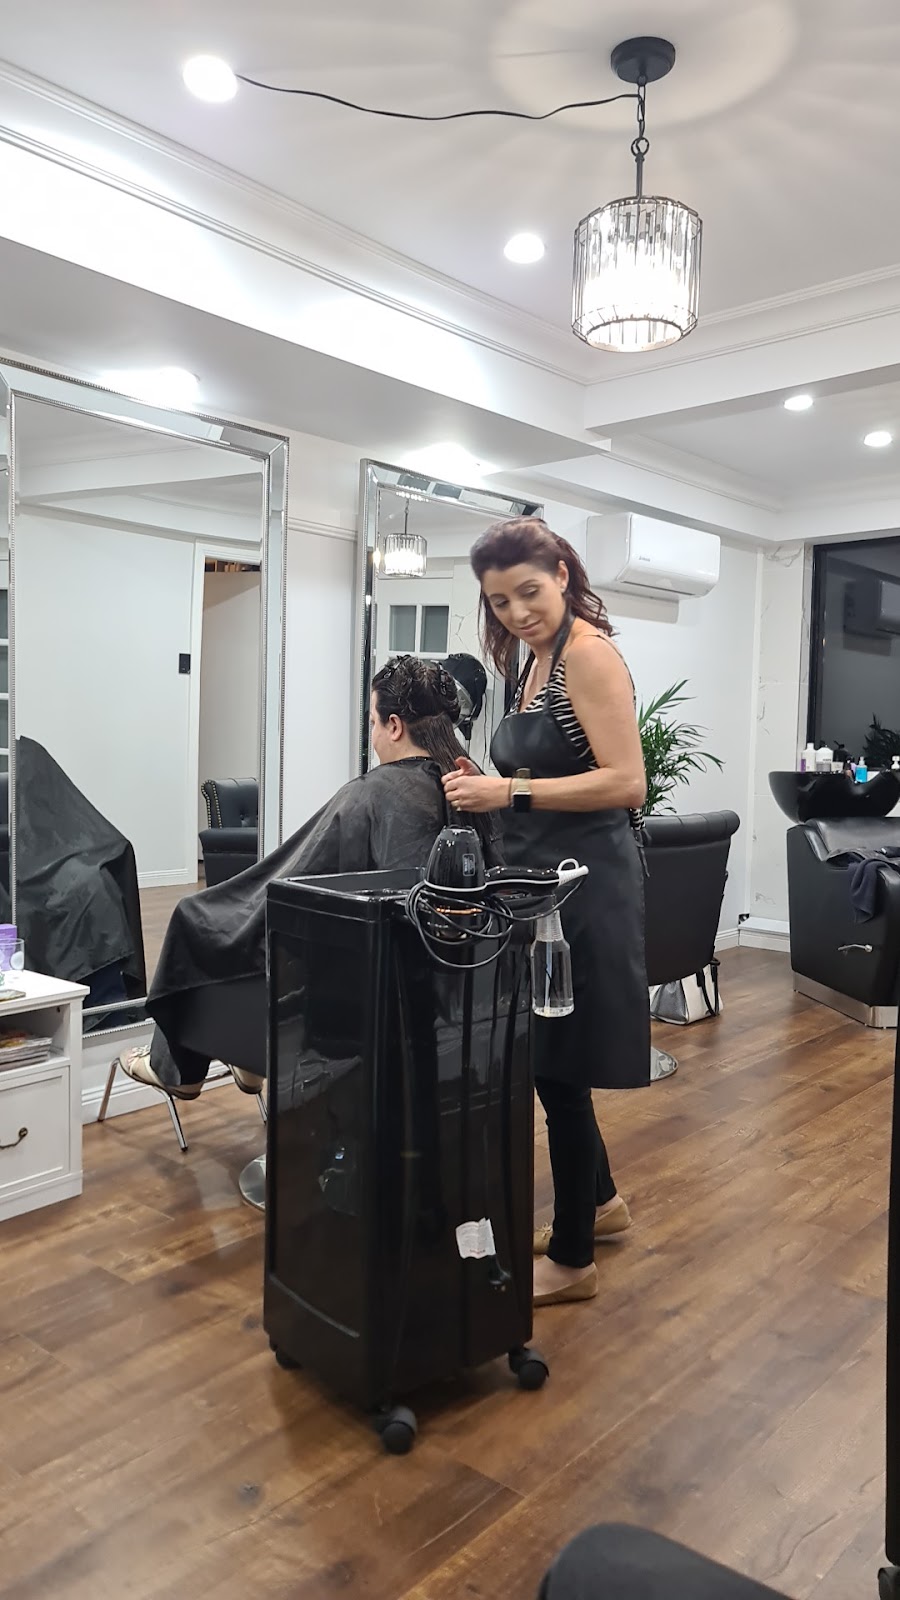 Studio 148 Hairdressing | 148 Brisbane Water Dr, Point Clare NSW 2250, Australia | Phone: 0411 414 044